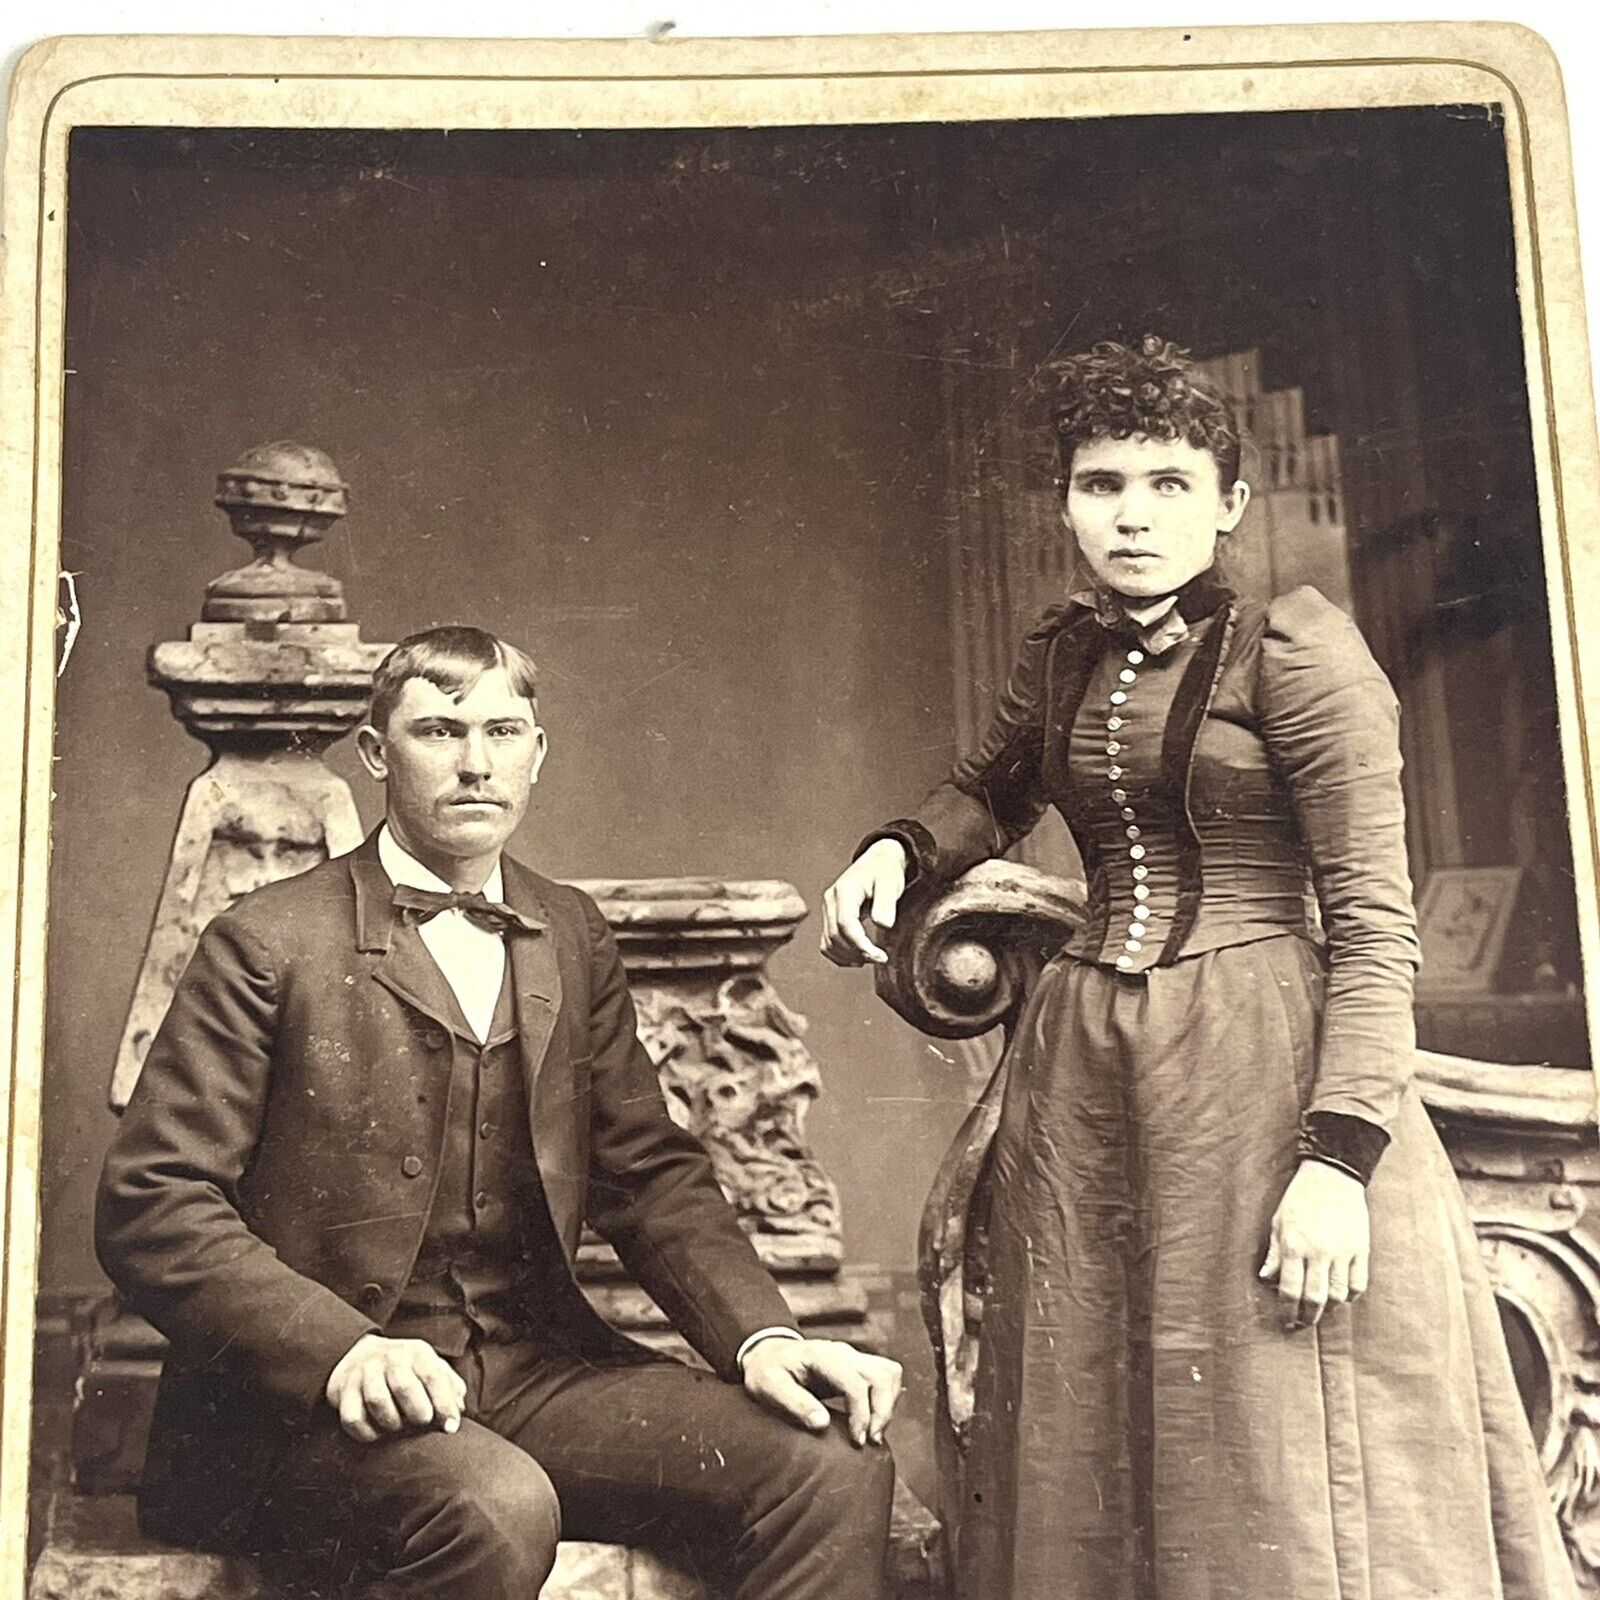 Antique Family Photo Cabinet Card Newlyweds Husband Wife Couple 5.5”x 4”